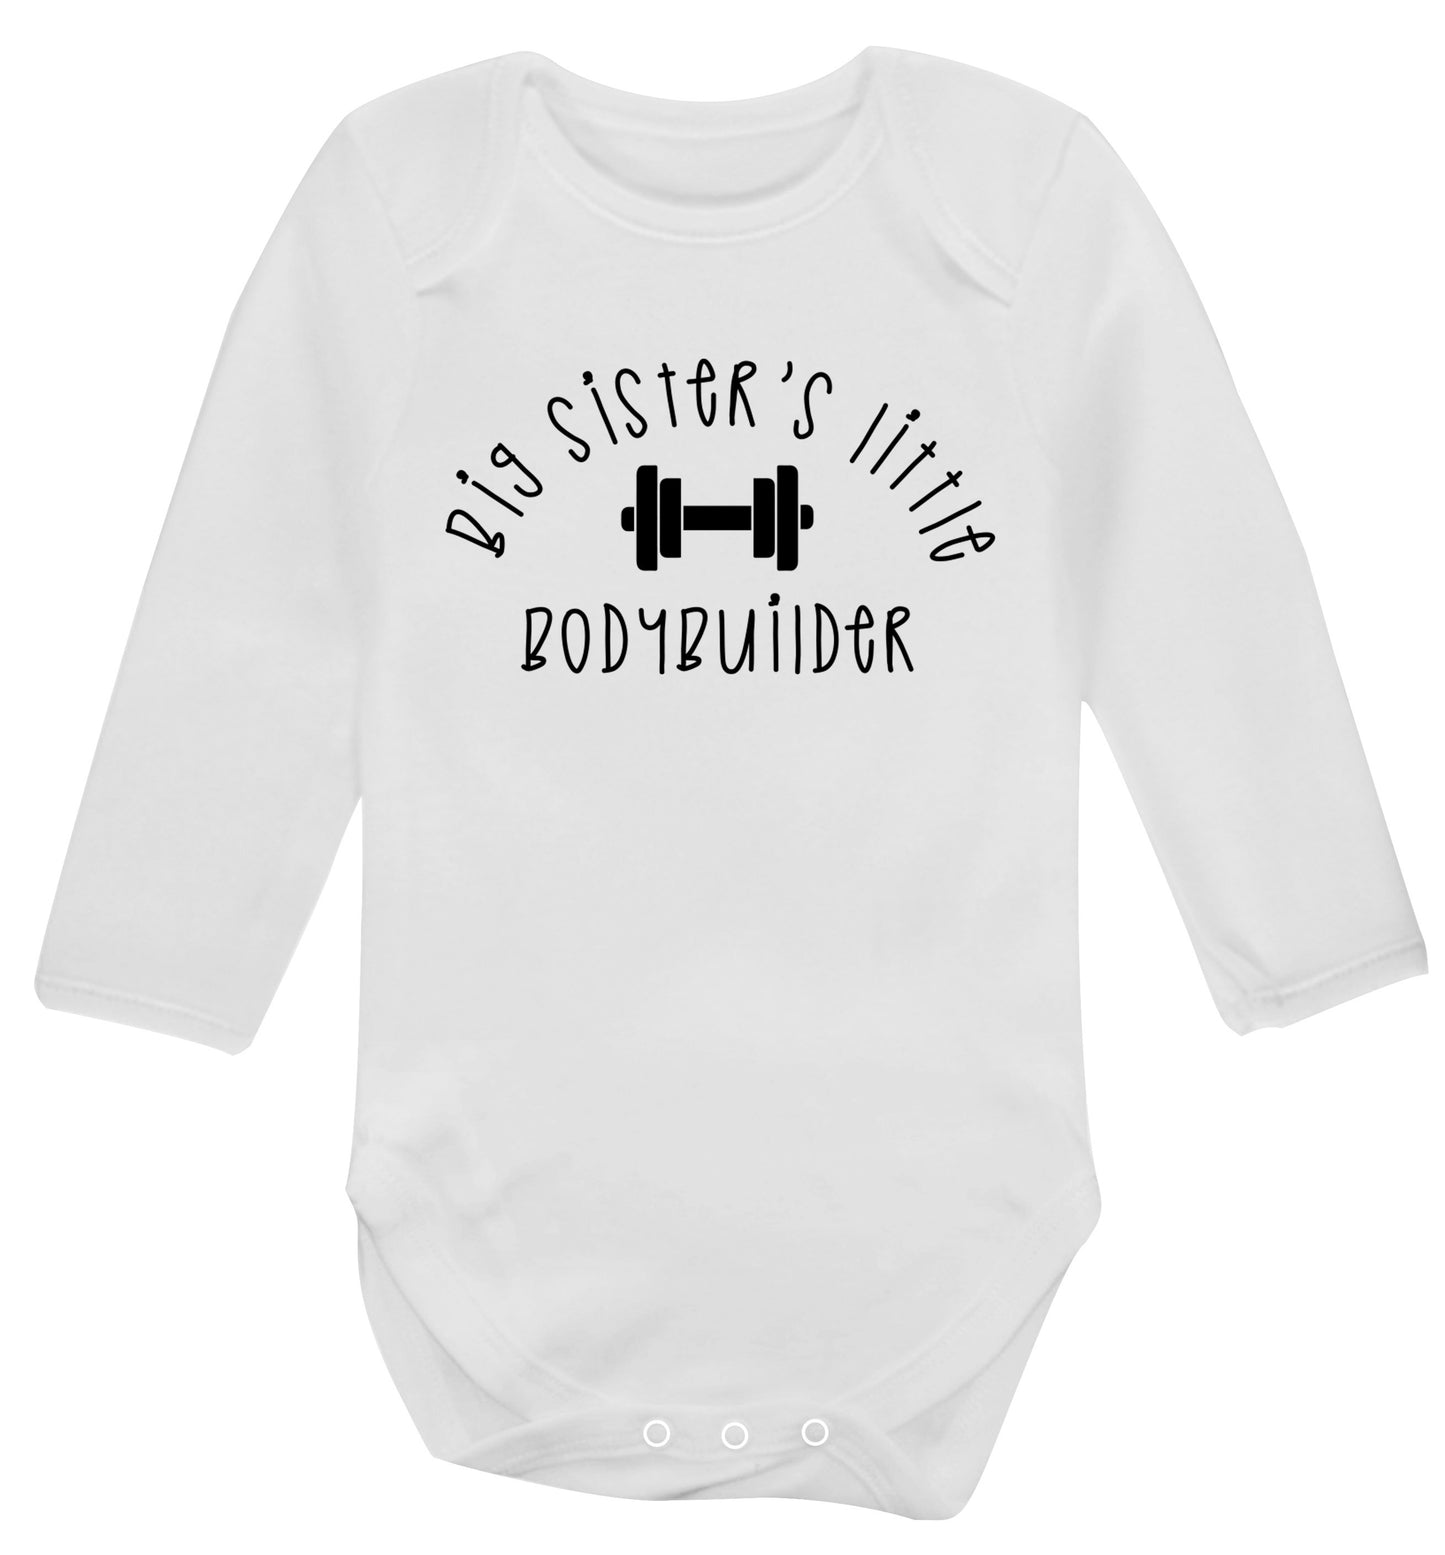 Big sister's little bodybuilder Baby Vest long sleeved white 6-12 months